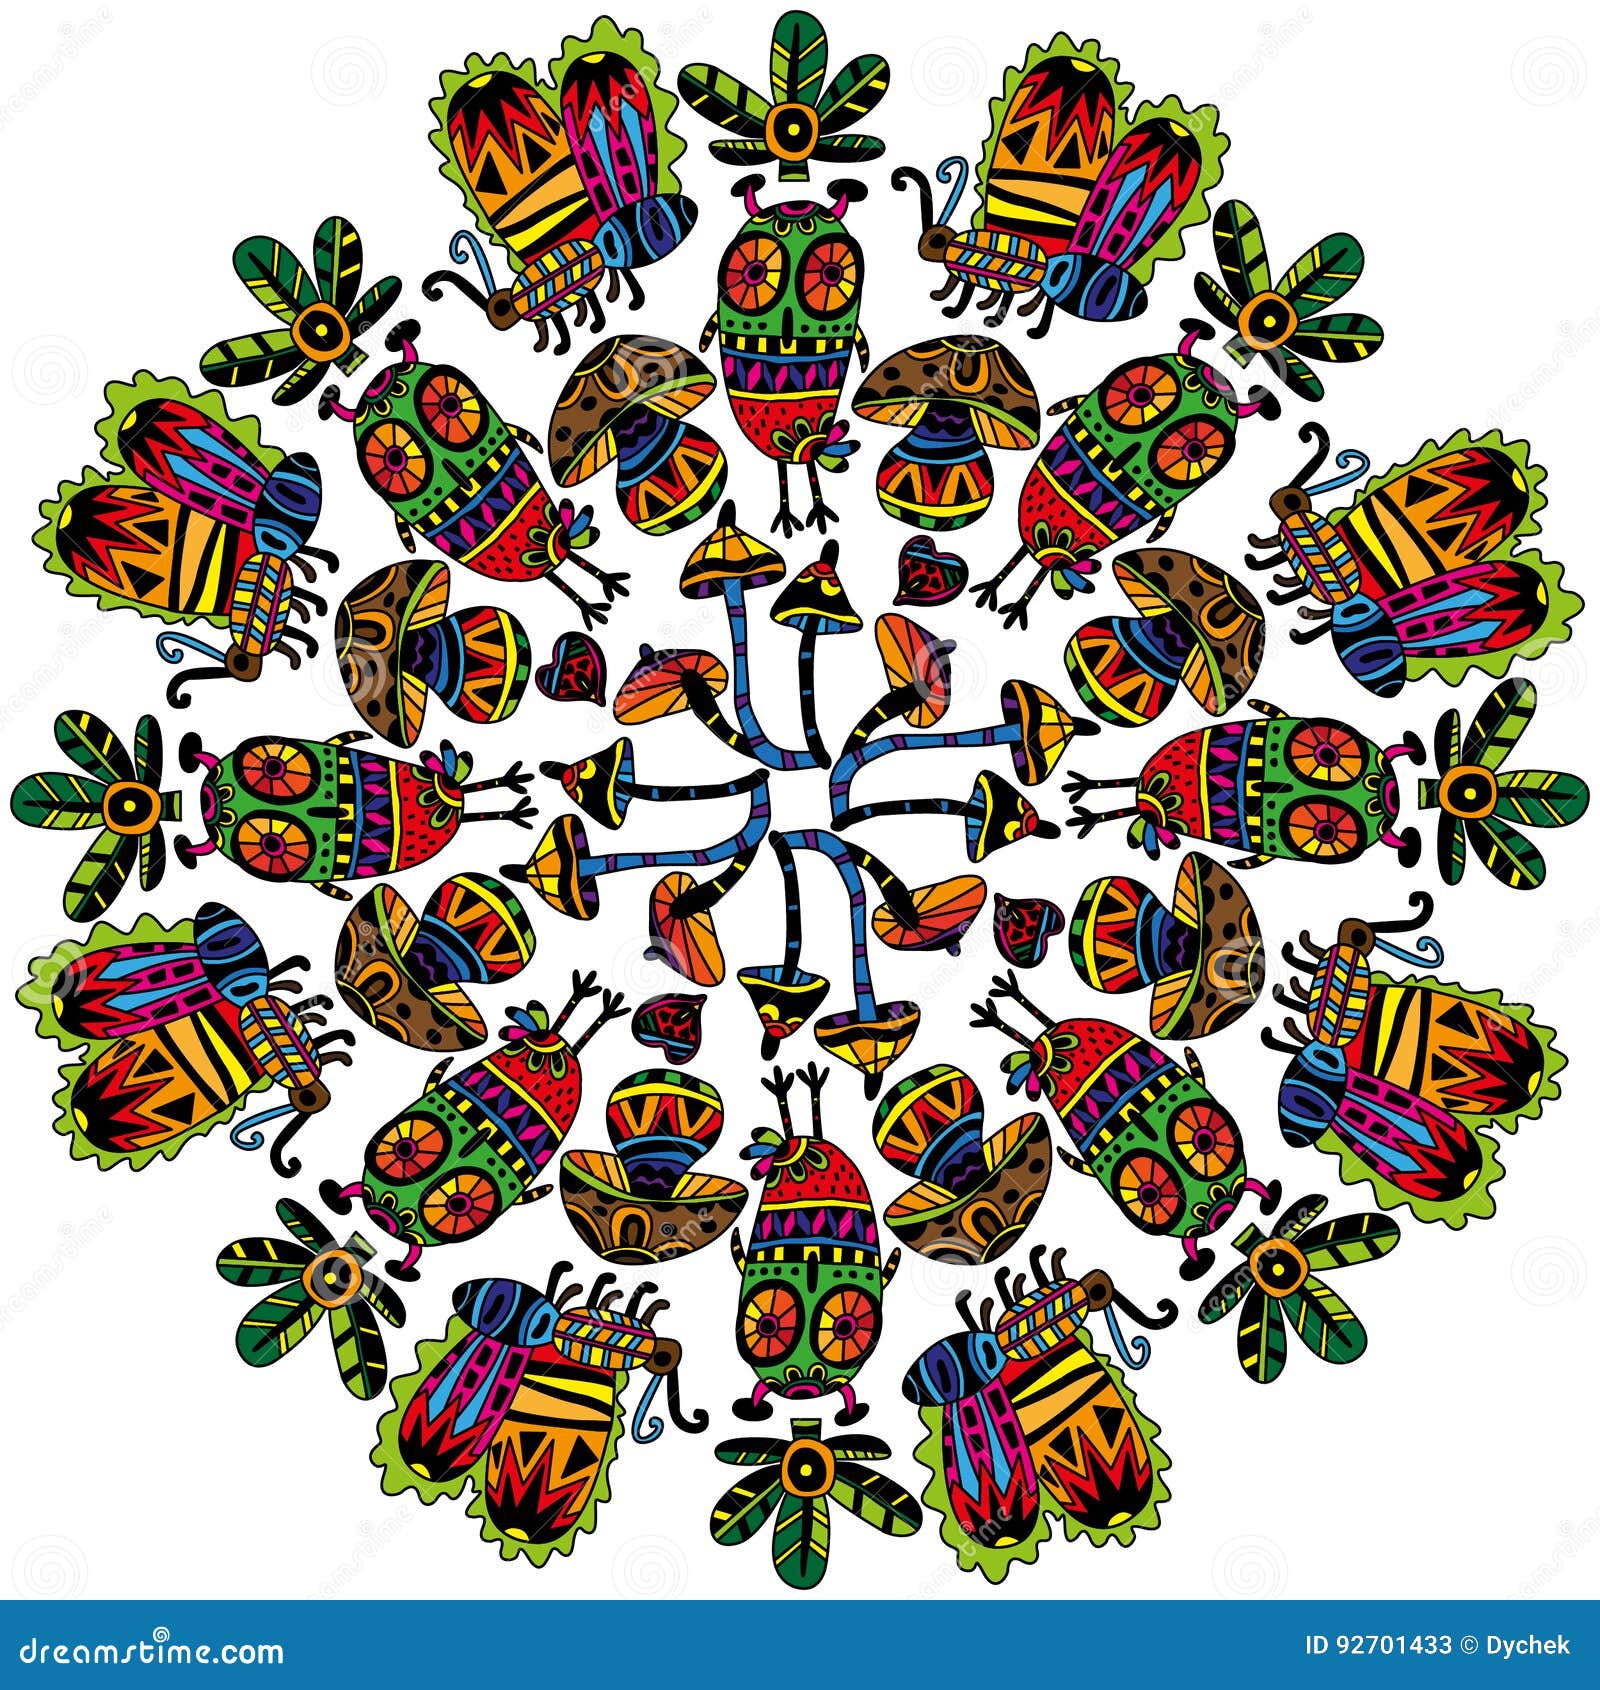 Mandala patterned animals. Print design on fabric, paper, ceramics.